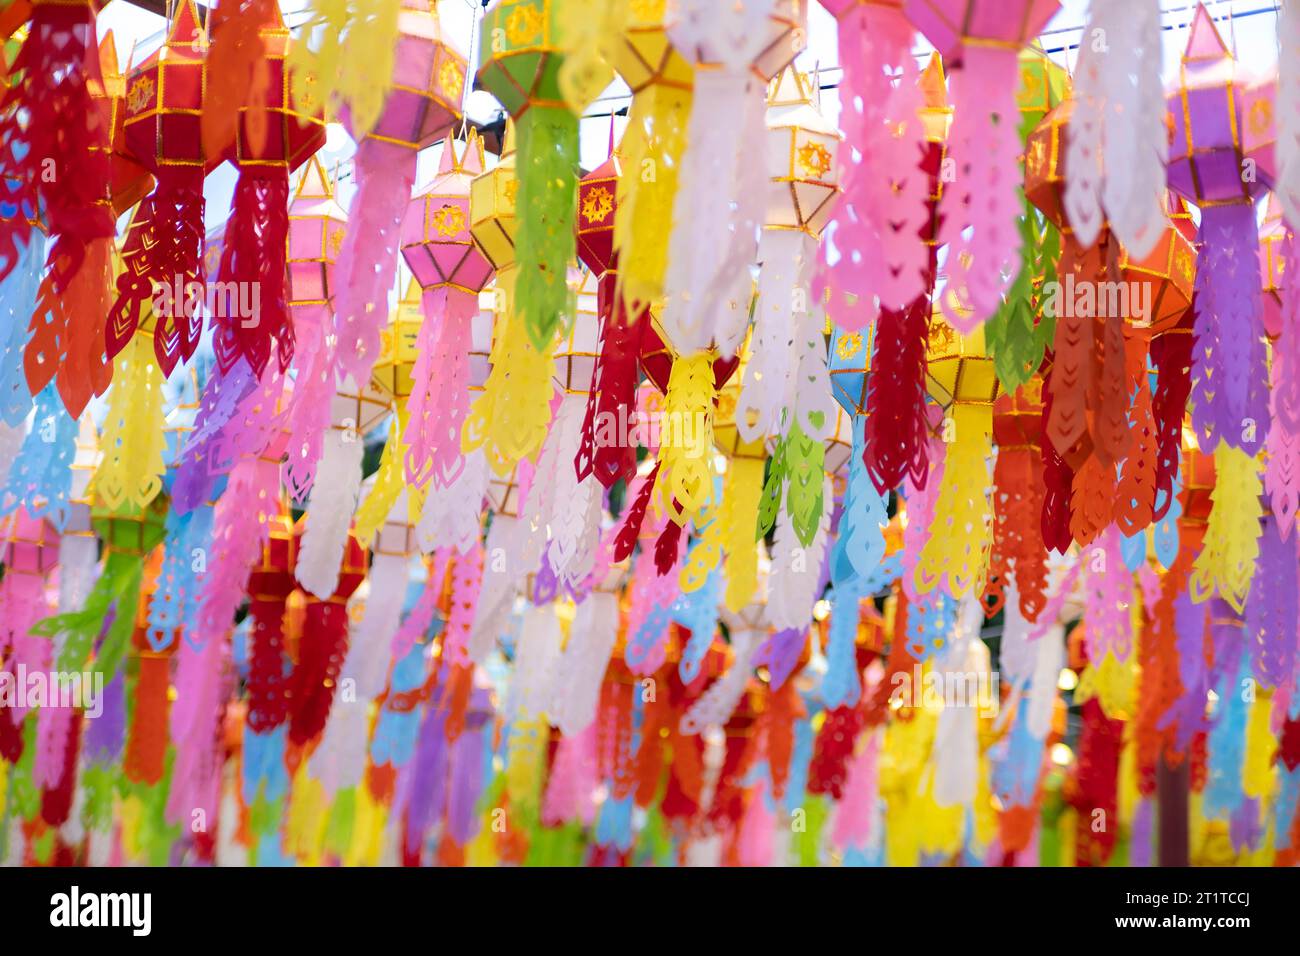 Colorful Lanna paper lanterns hang in Lamphun temples. Popular lantern festival during Loy Krathong in northern Thailand. Traditional Yi Peng paper la Stock Photo